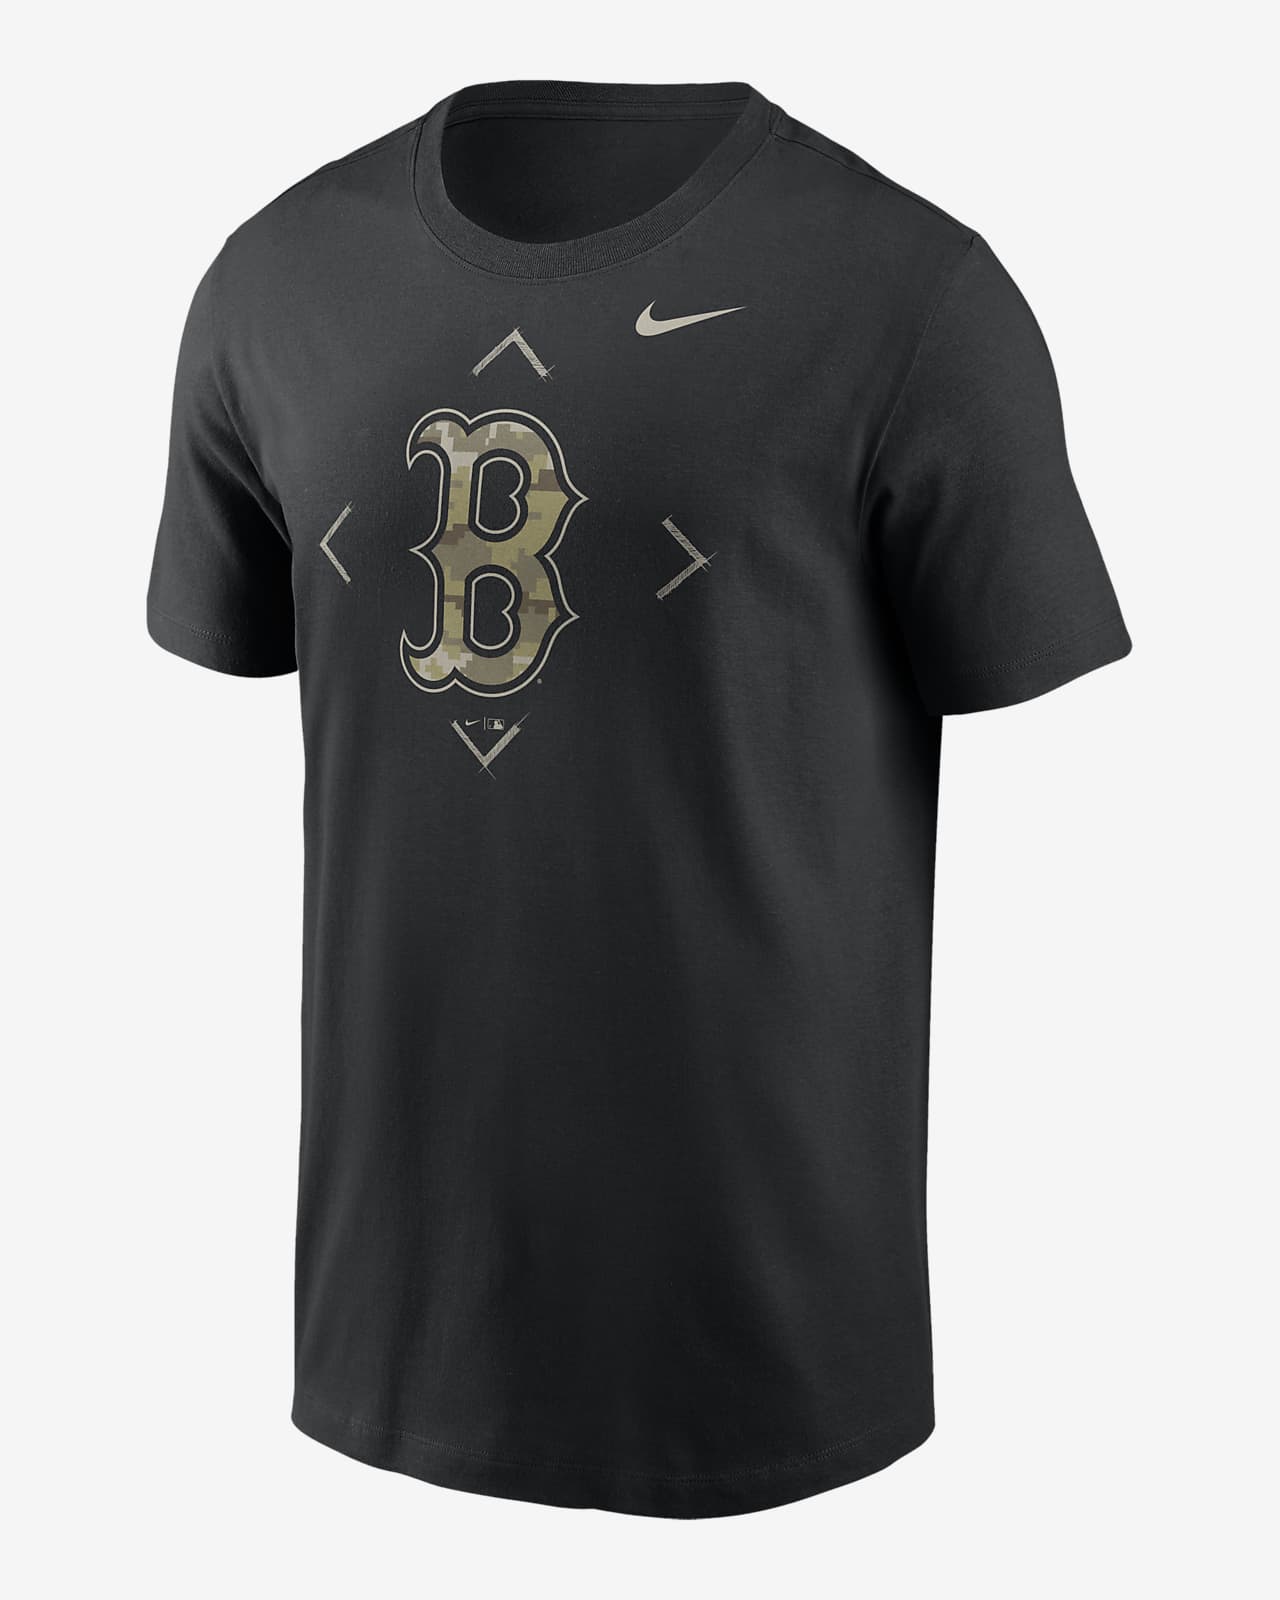 Men's Nike Black Boston Red Sox Camo Logo T-Shirt